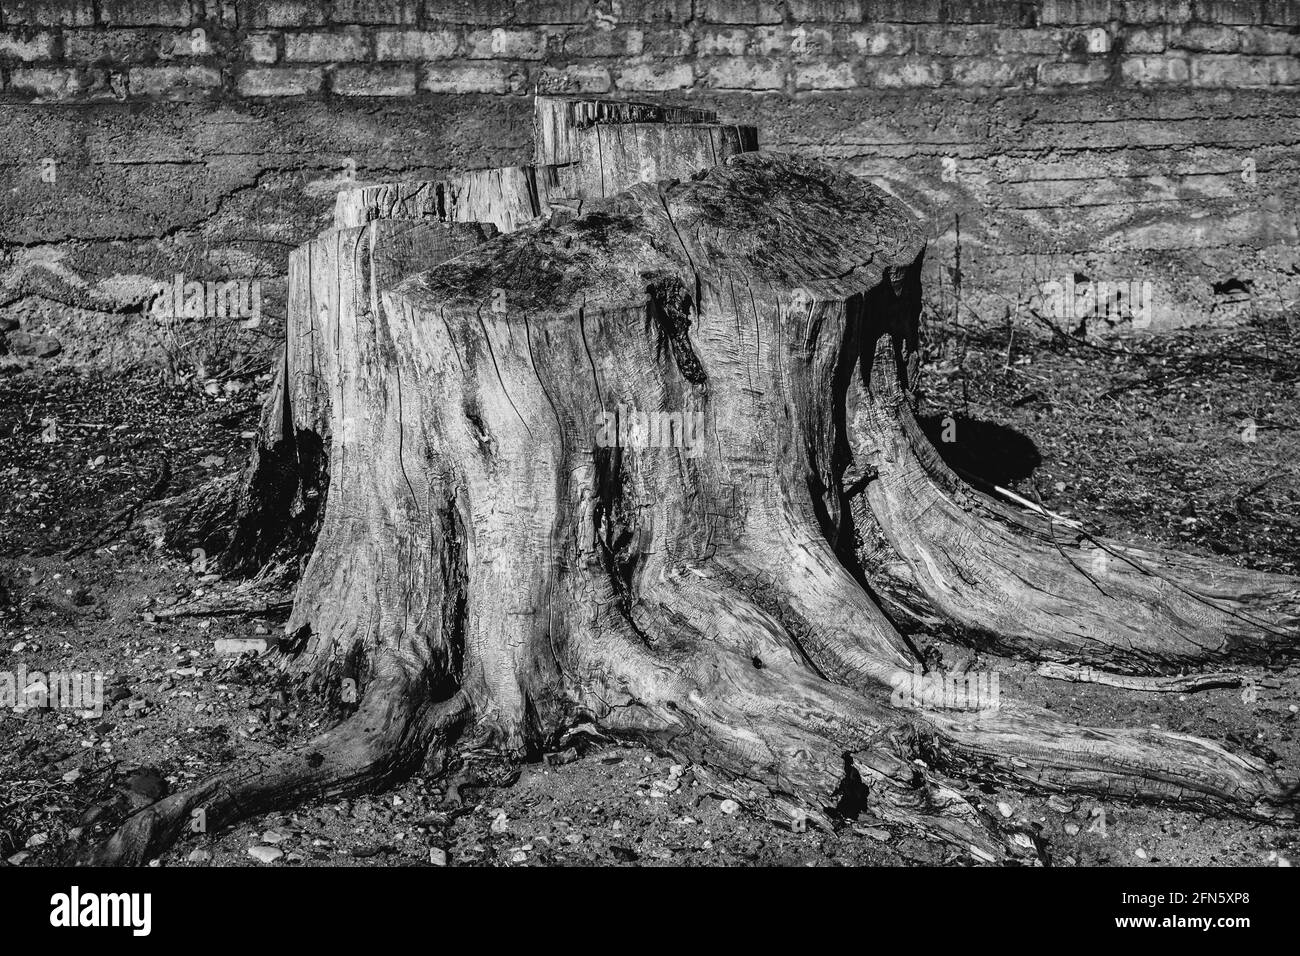 felled tree trunk in monochrome Stock Photo